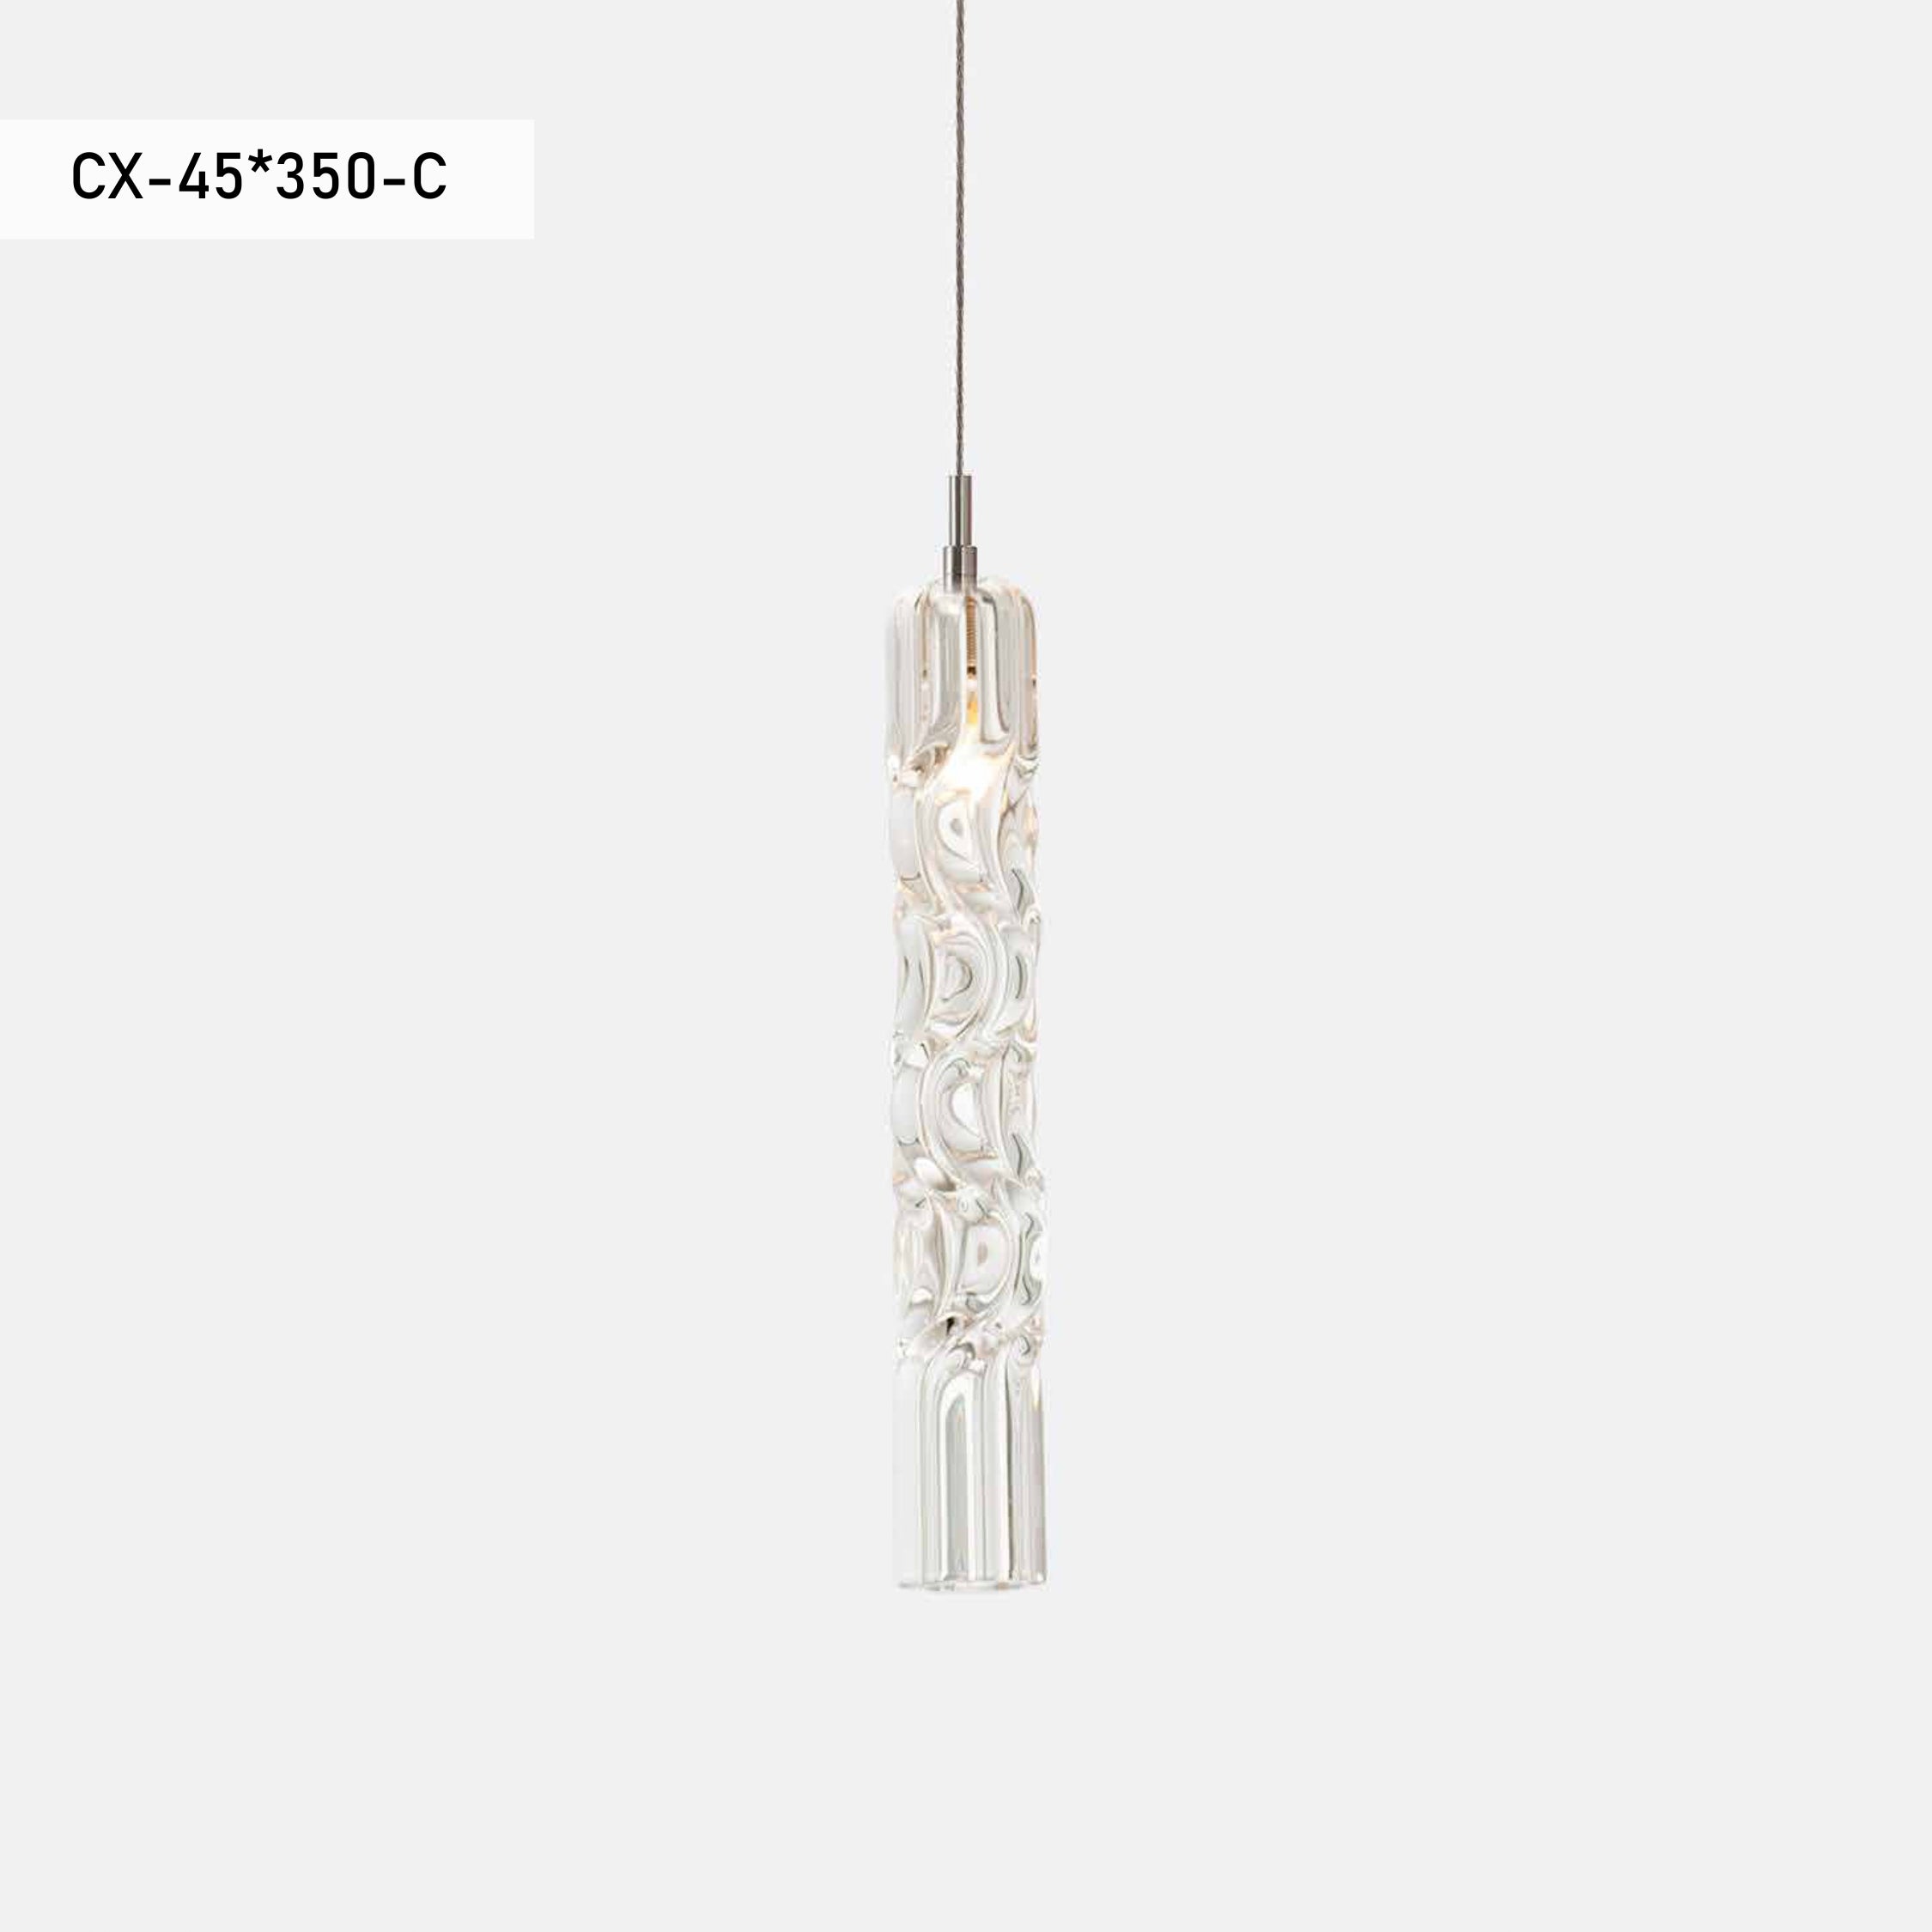 Hanging Lights | CX-45*350-C